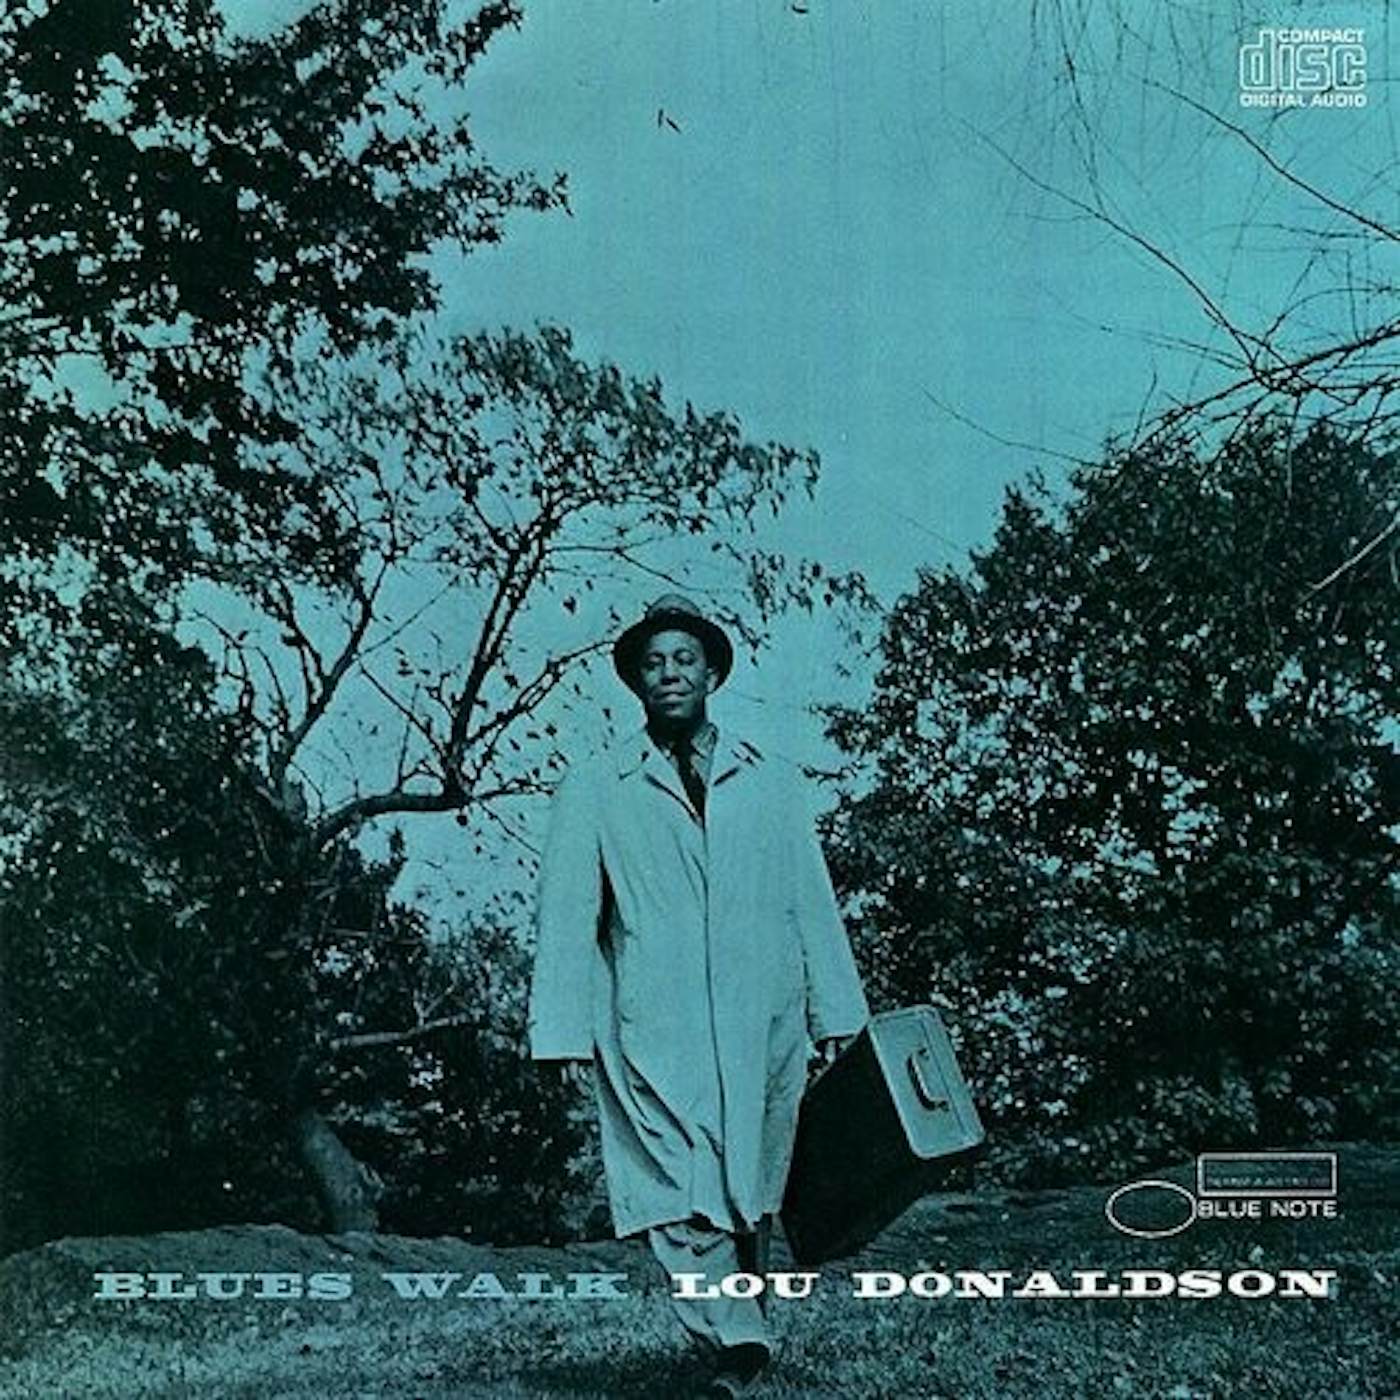 Lou Donaldson Blues Walk Vinyl Record